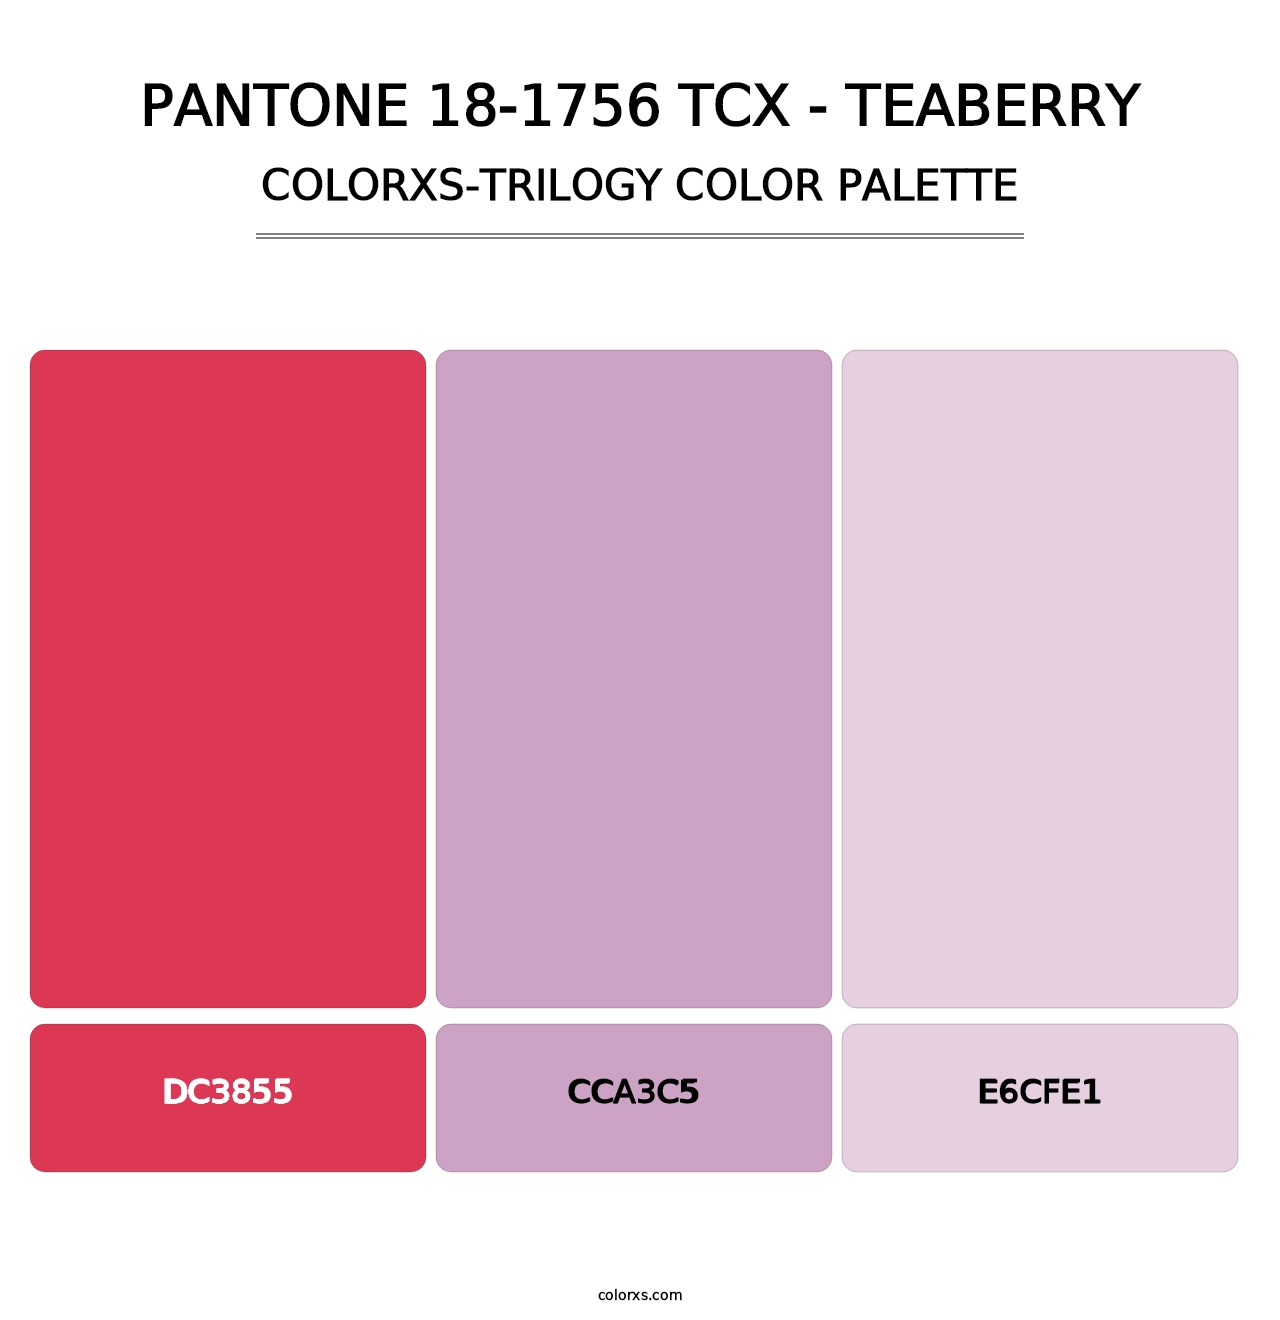 PANTONE 18-1756 TCX - Teaberry - Colorxs Trilogy Palette